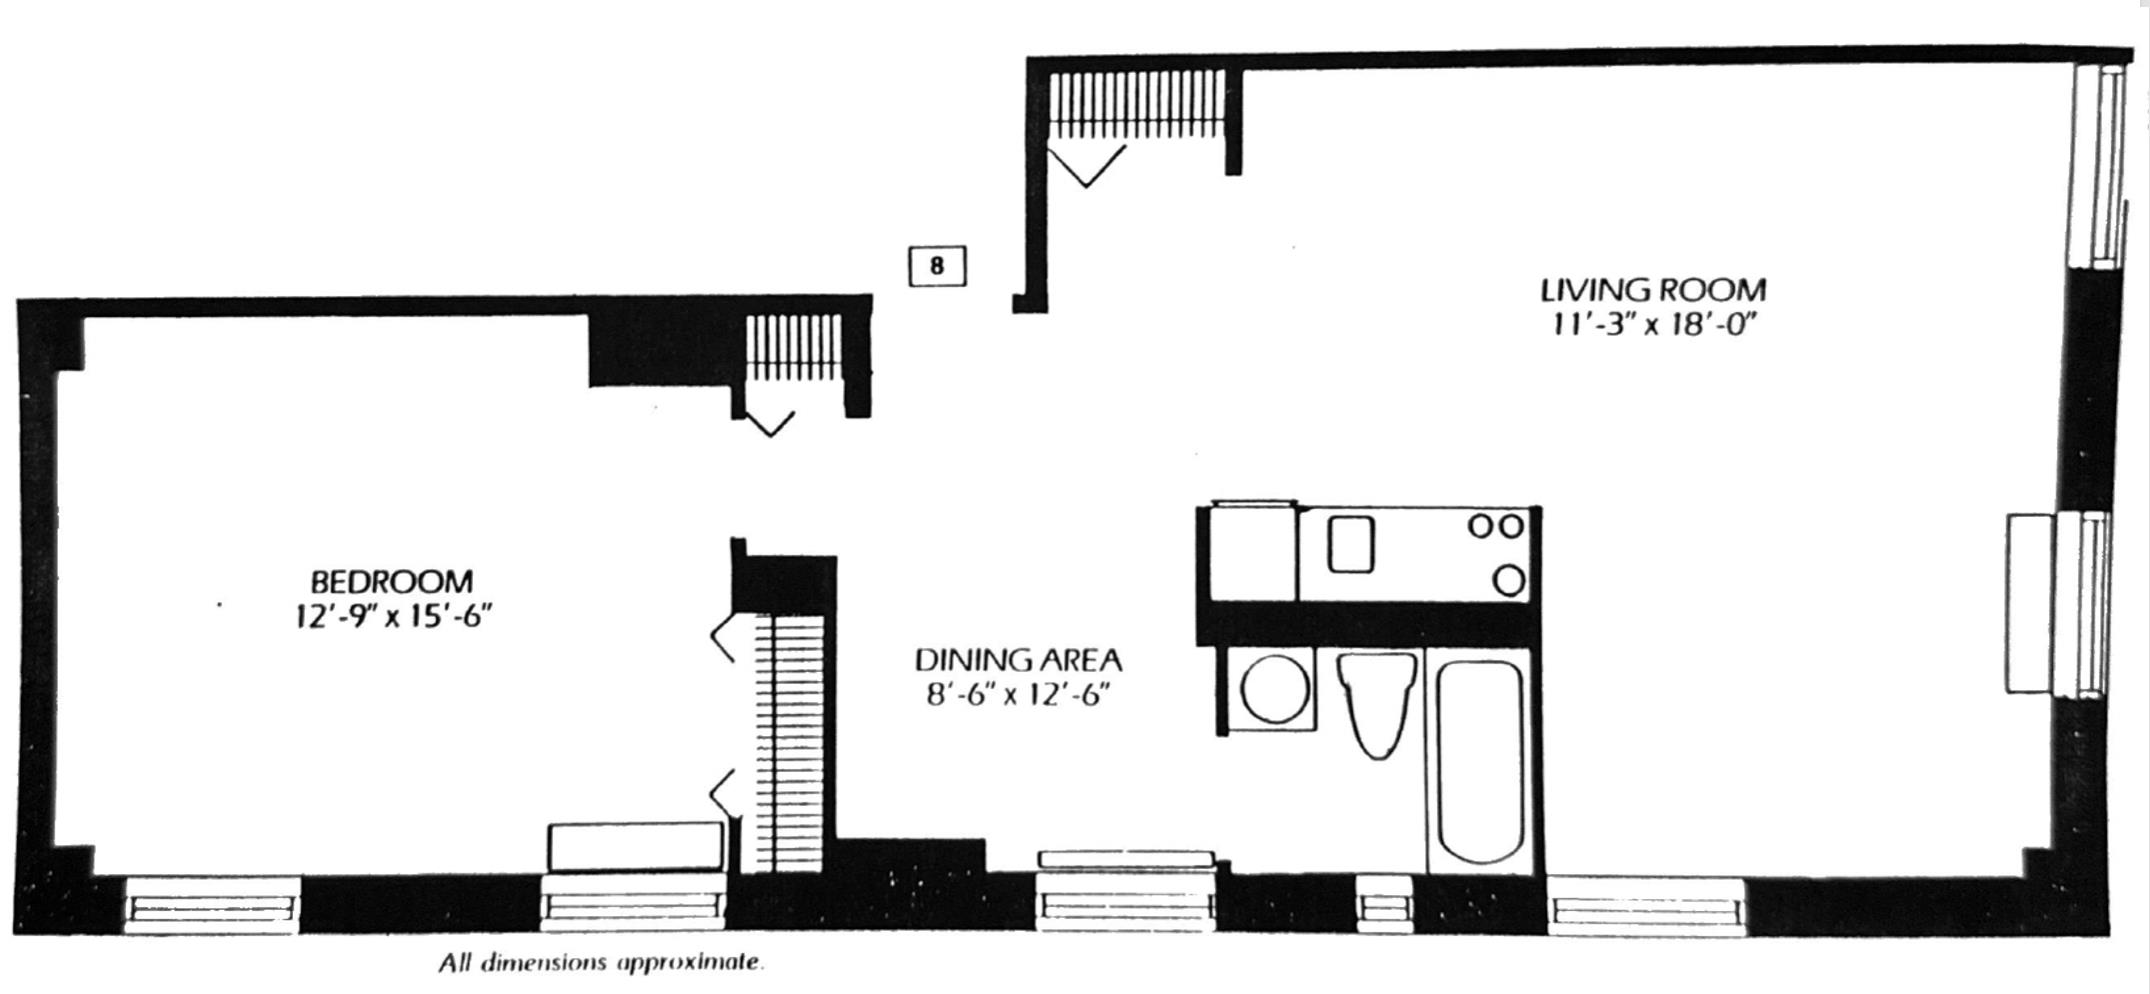 Floorplan for 150 West 51st Street, 1508